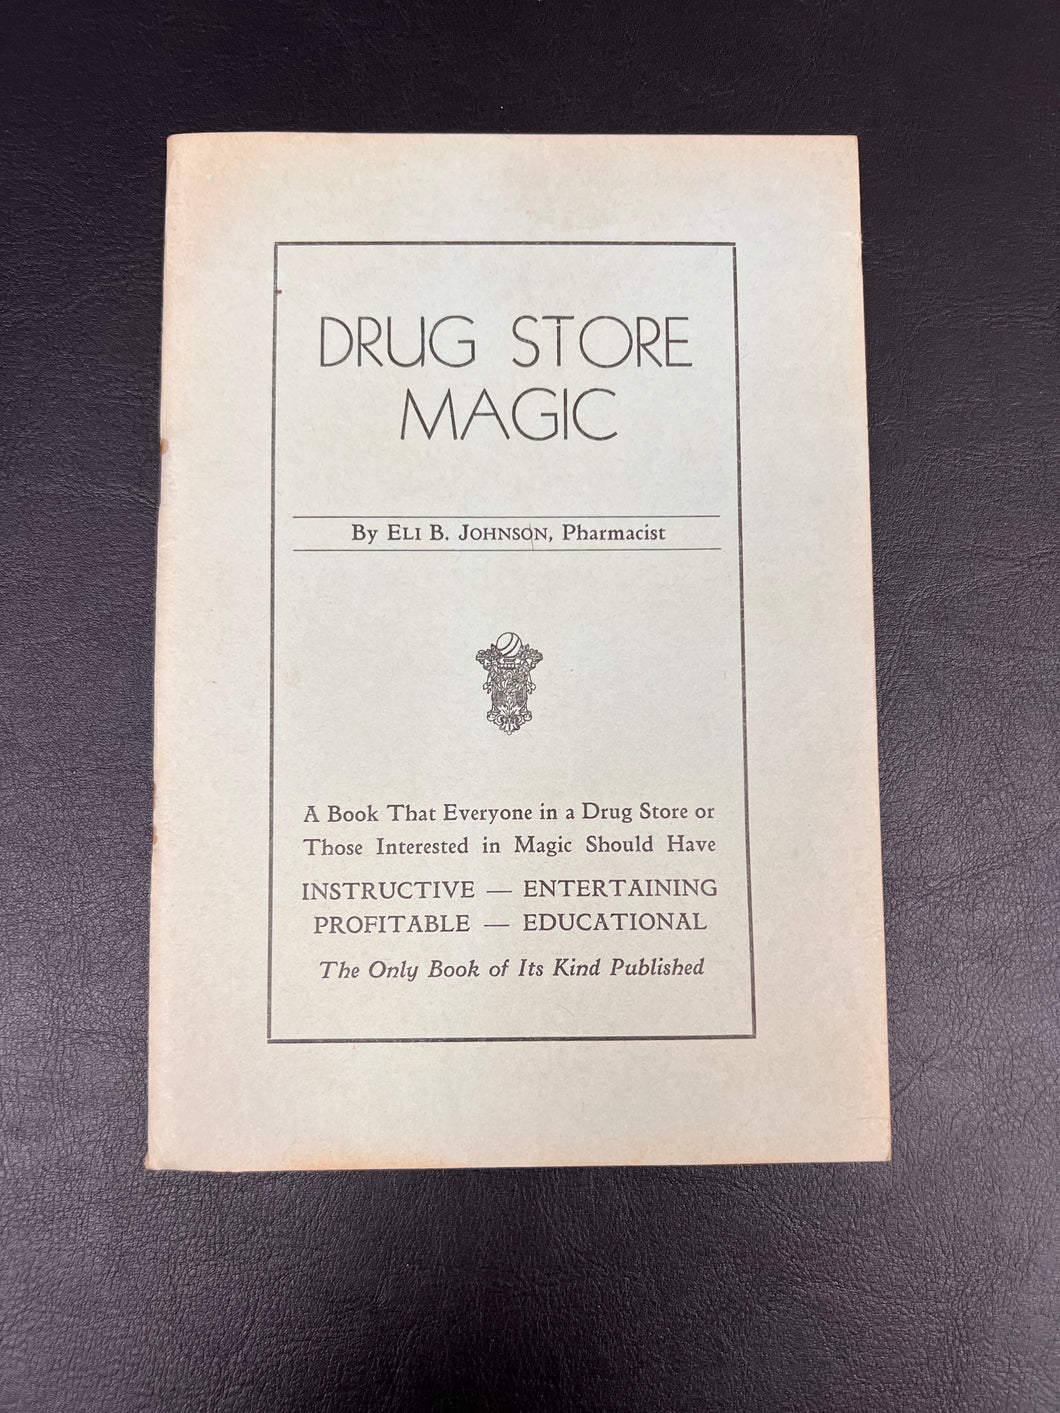 DRUG STORE MAGIC by Eli B. Johnson